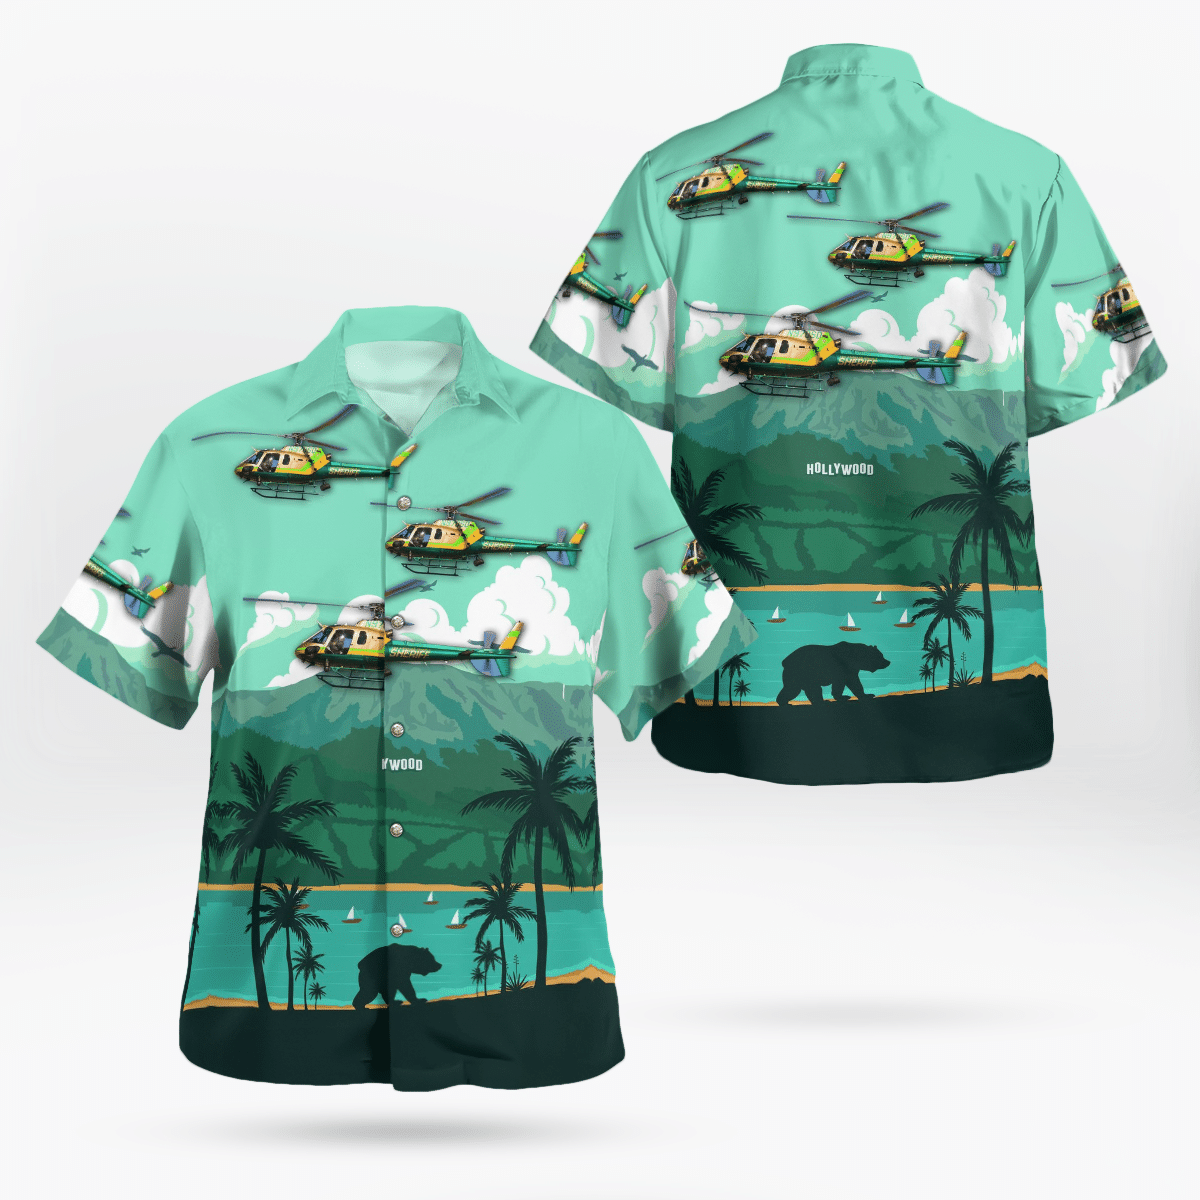 Listed below are some High-quality Aloha Shirt 85